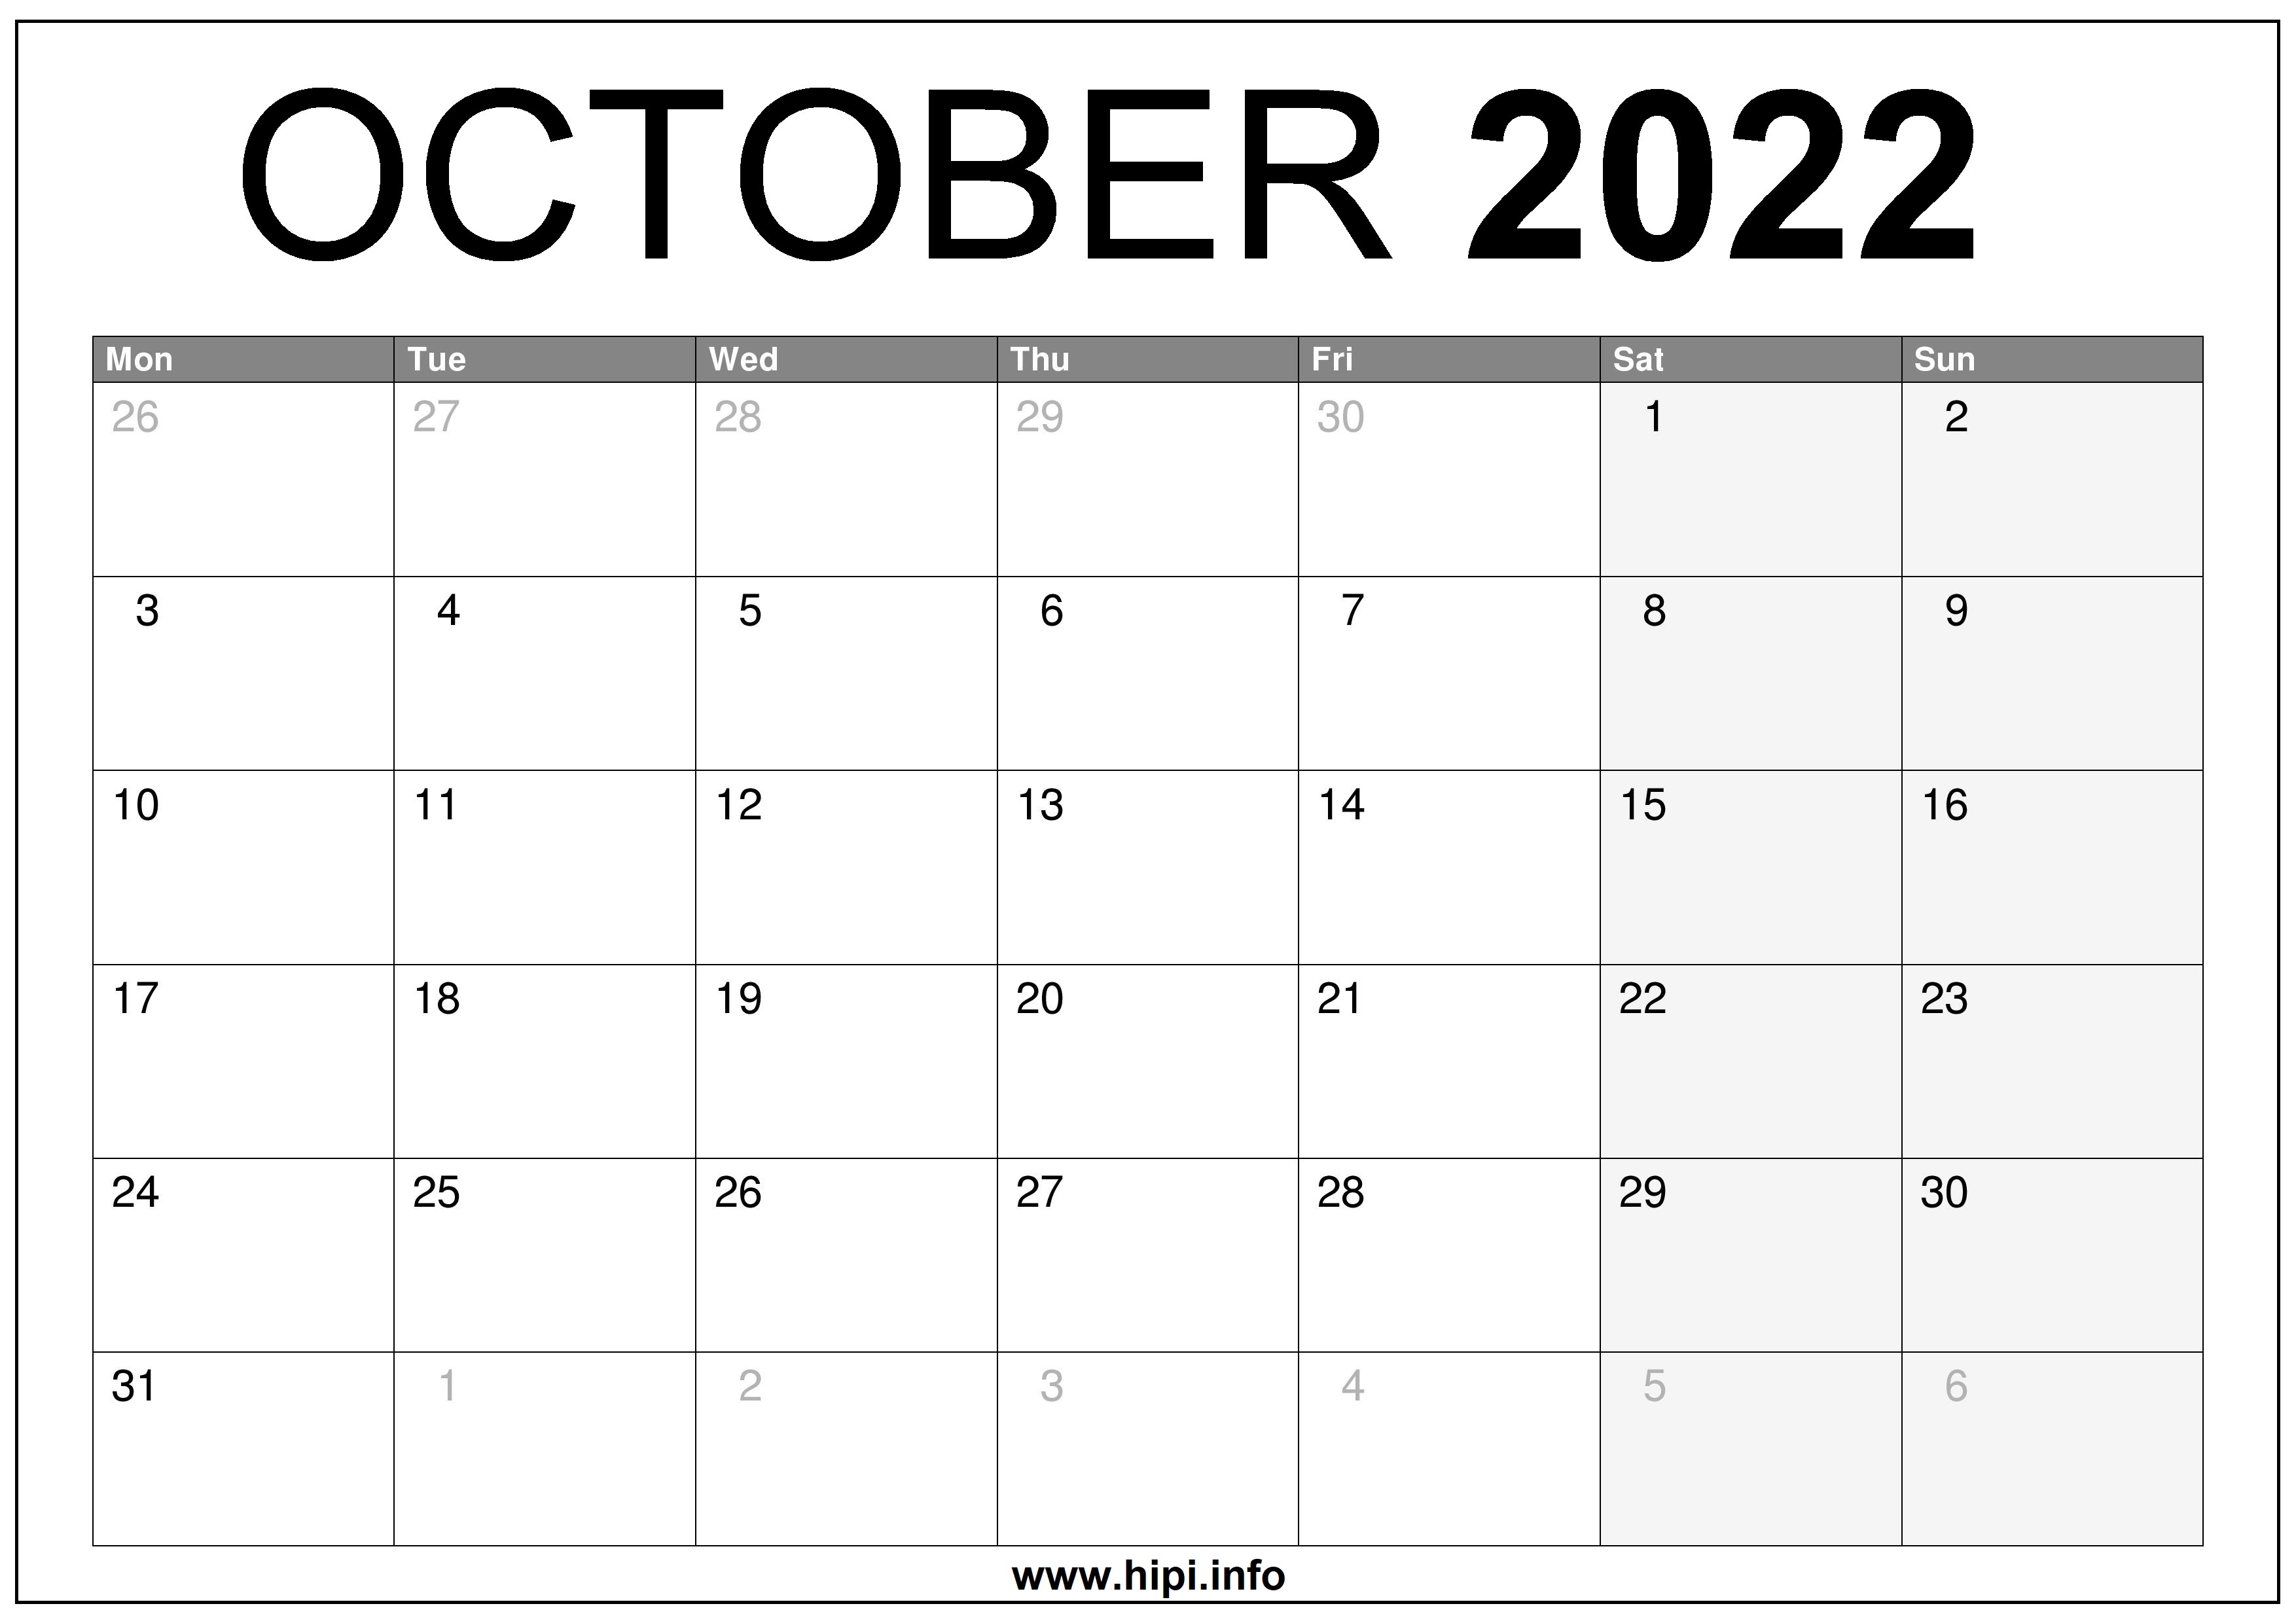 Free Calendar October 2022 October 2022 Uk Calendar Printable Free - Hipi.info | Calendars Printable  Free